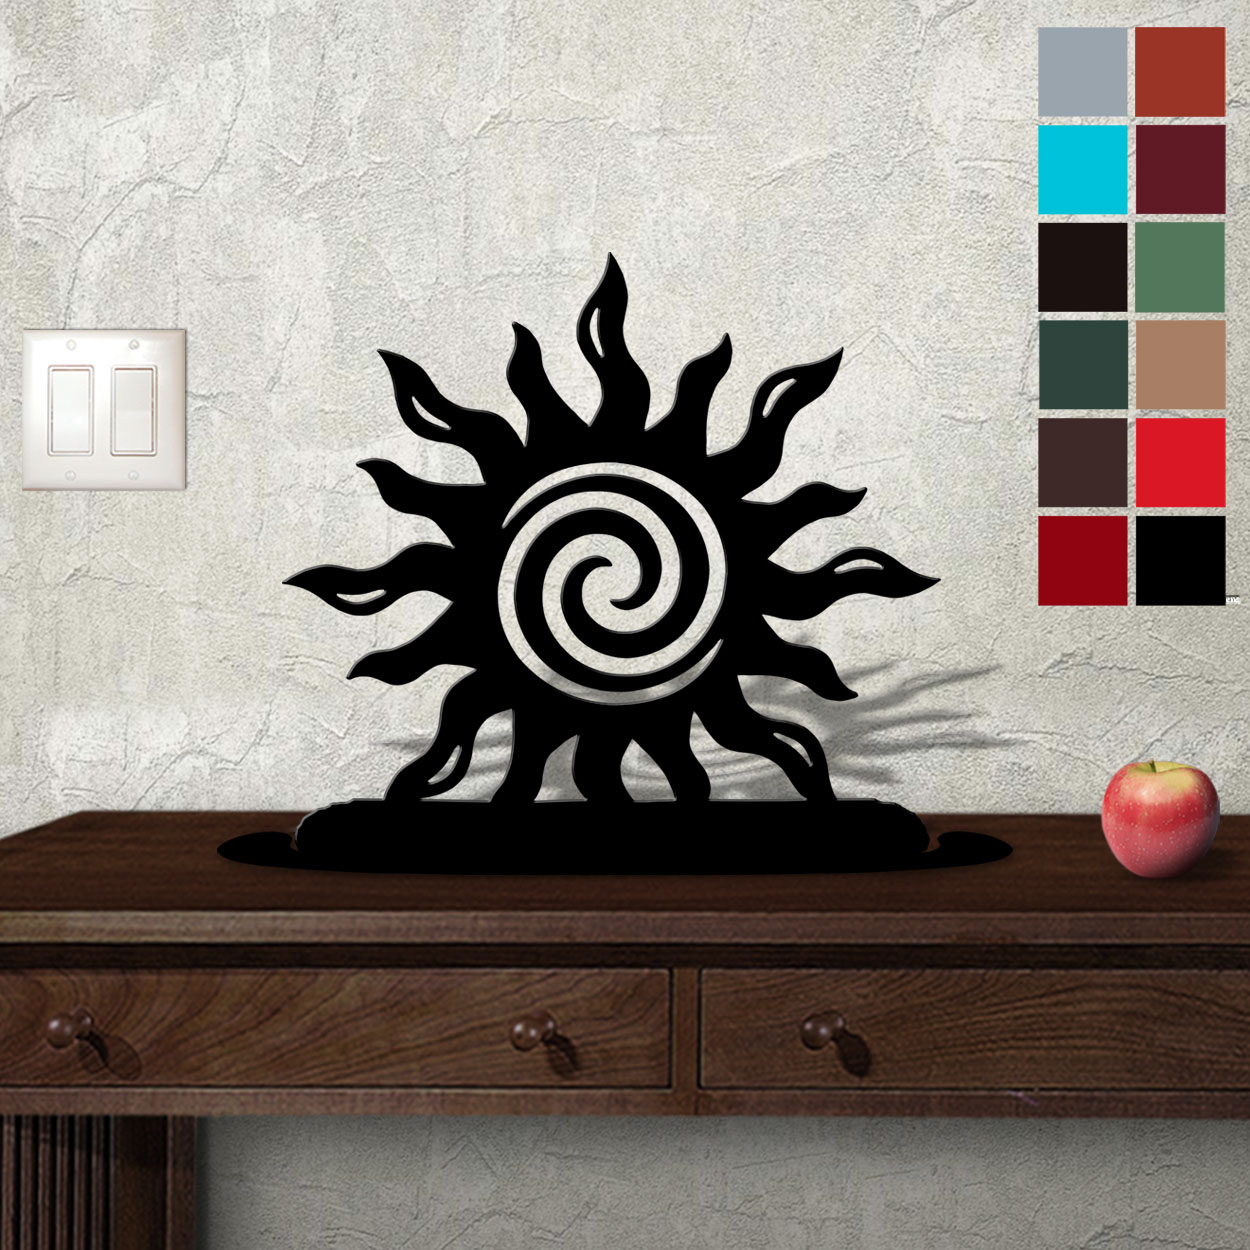 623039 - Tabletop Metal Sculpture - 18in W x 17in H - Spiral Sun - Choose Color